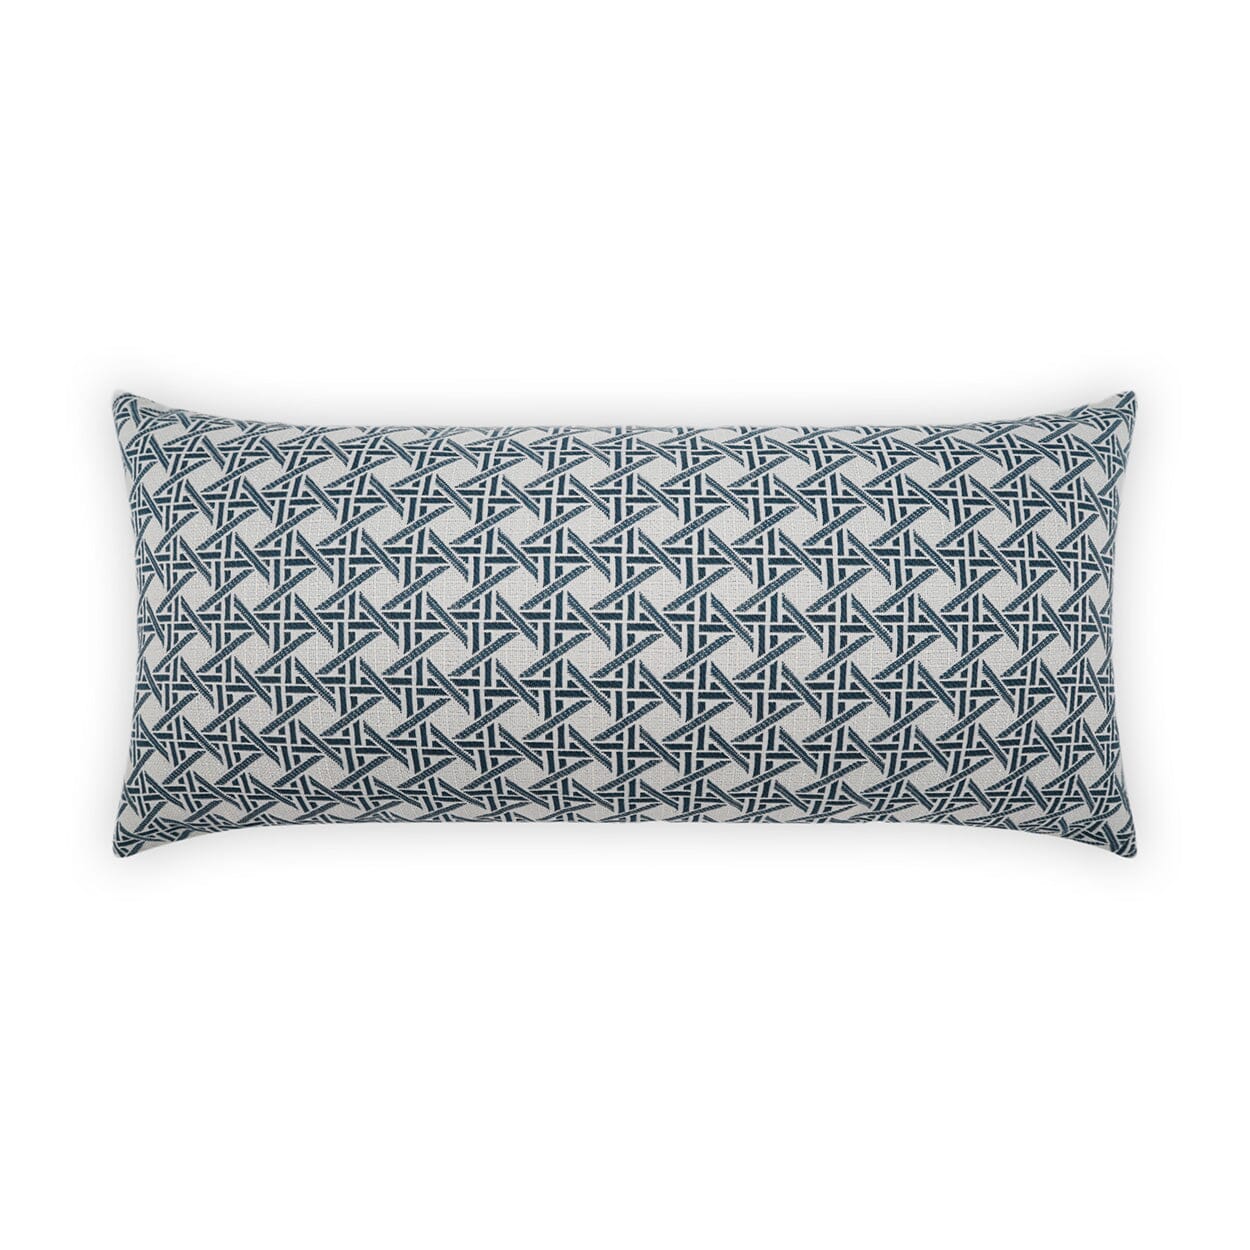 D.V. Kap 12" x 24" Outdoor Lumbar Pillow | Pella Blue Lumbar Pillows D.V Kap Outdoor